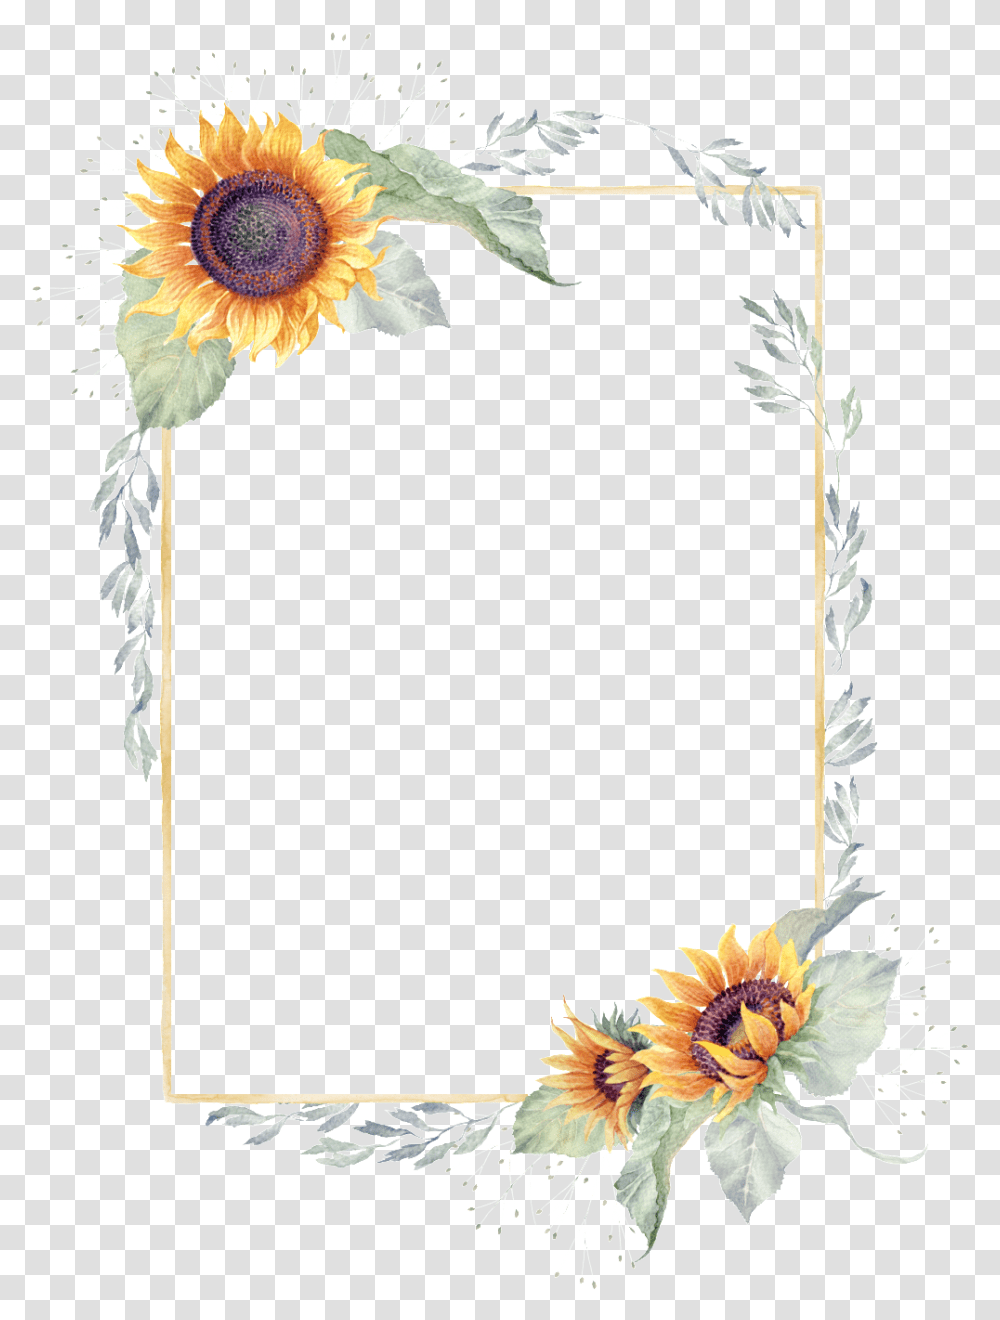 Download Free Sunflower Border Clear Background Sunflower Border, Plant, Daisy, Art, Flower Arrangement Transparent Png